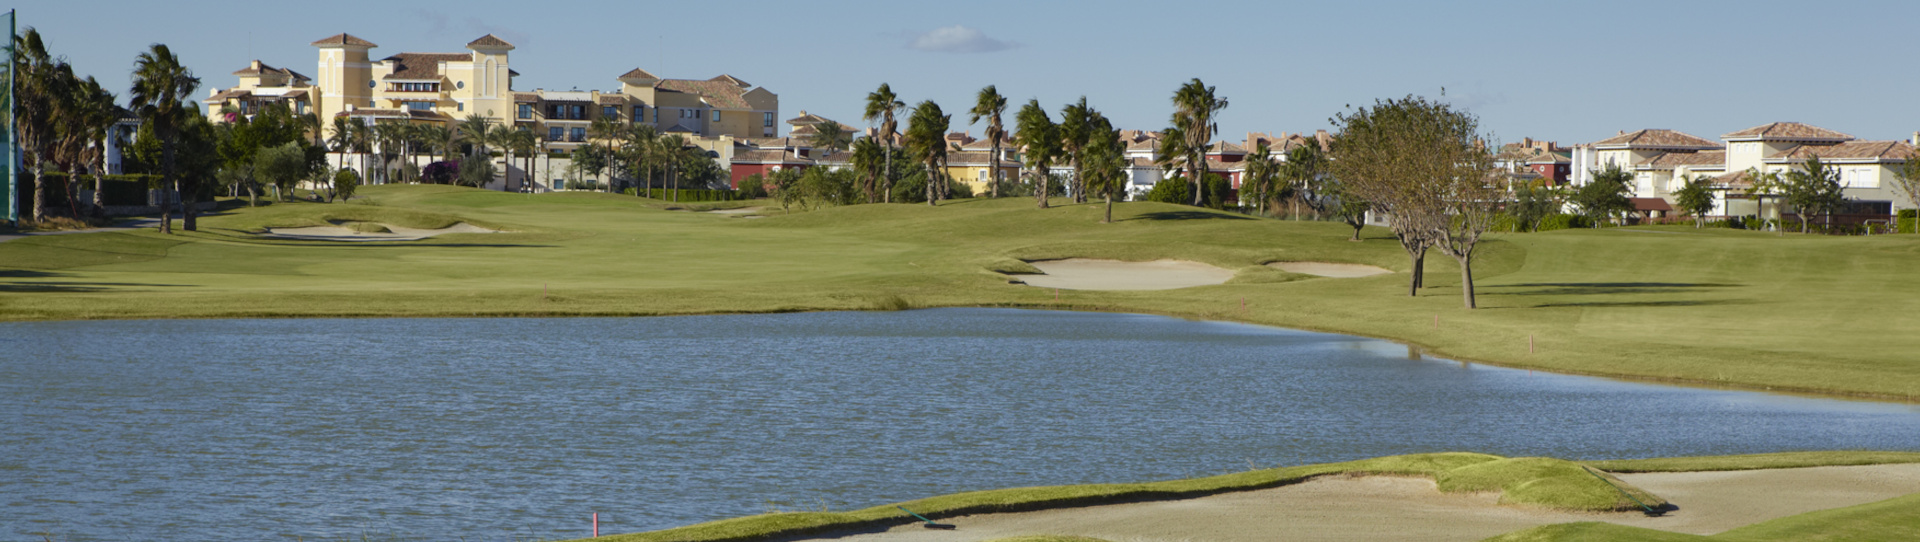 Spain golf courses - Mar Menor Golf Course - Photo 2